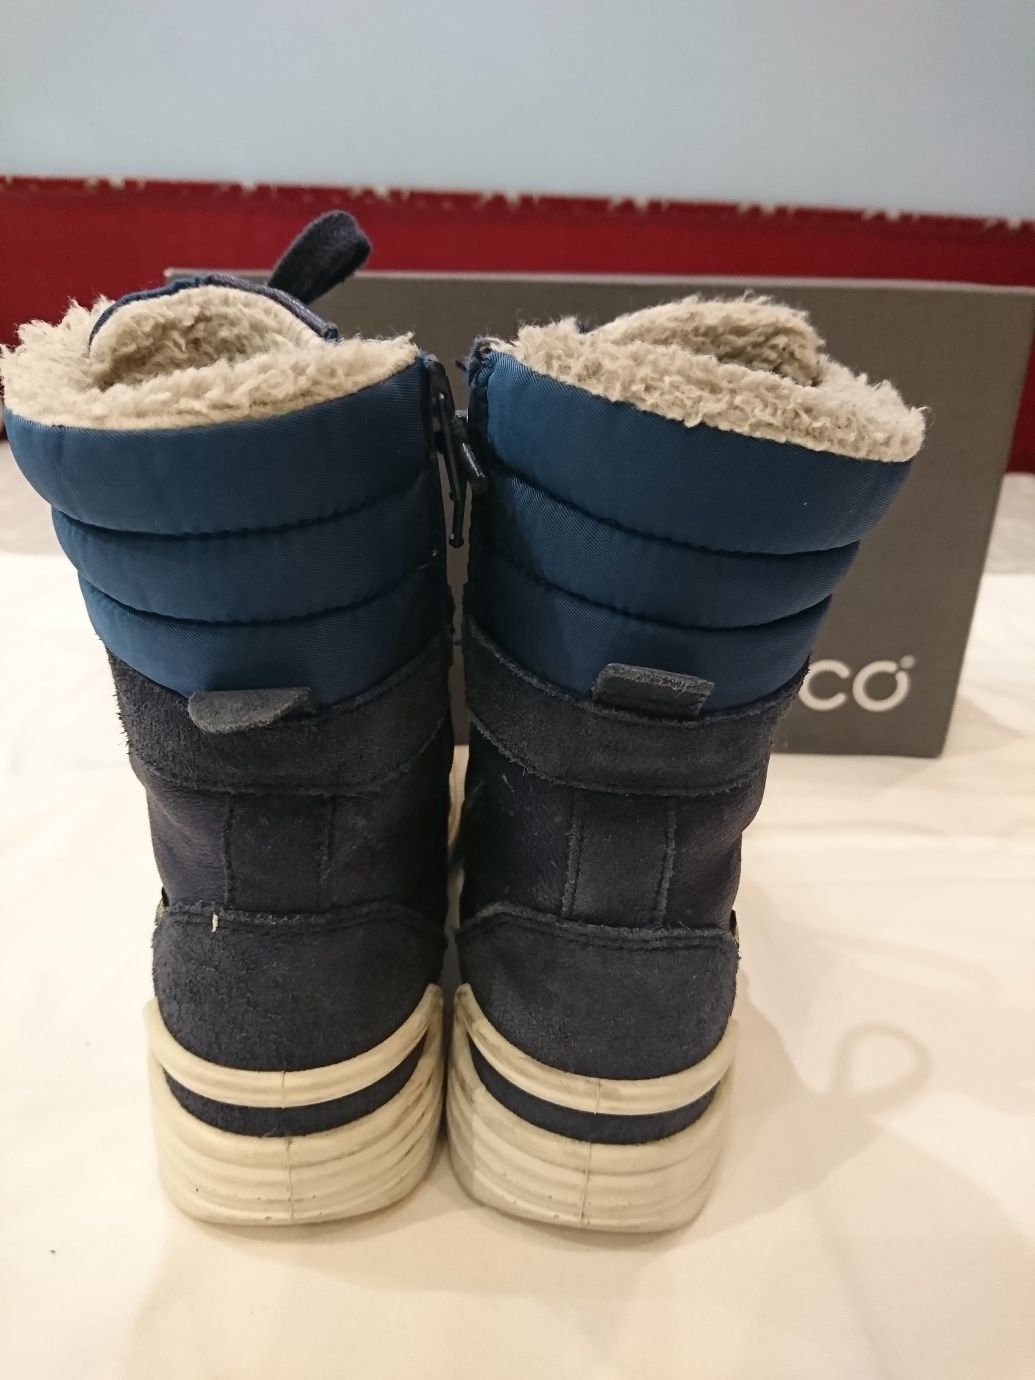 Черевики, чоботи зимові, ботинки высокие, зимние Ecco р. 34